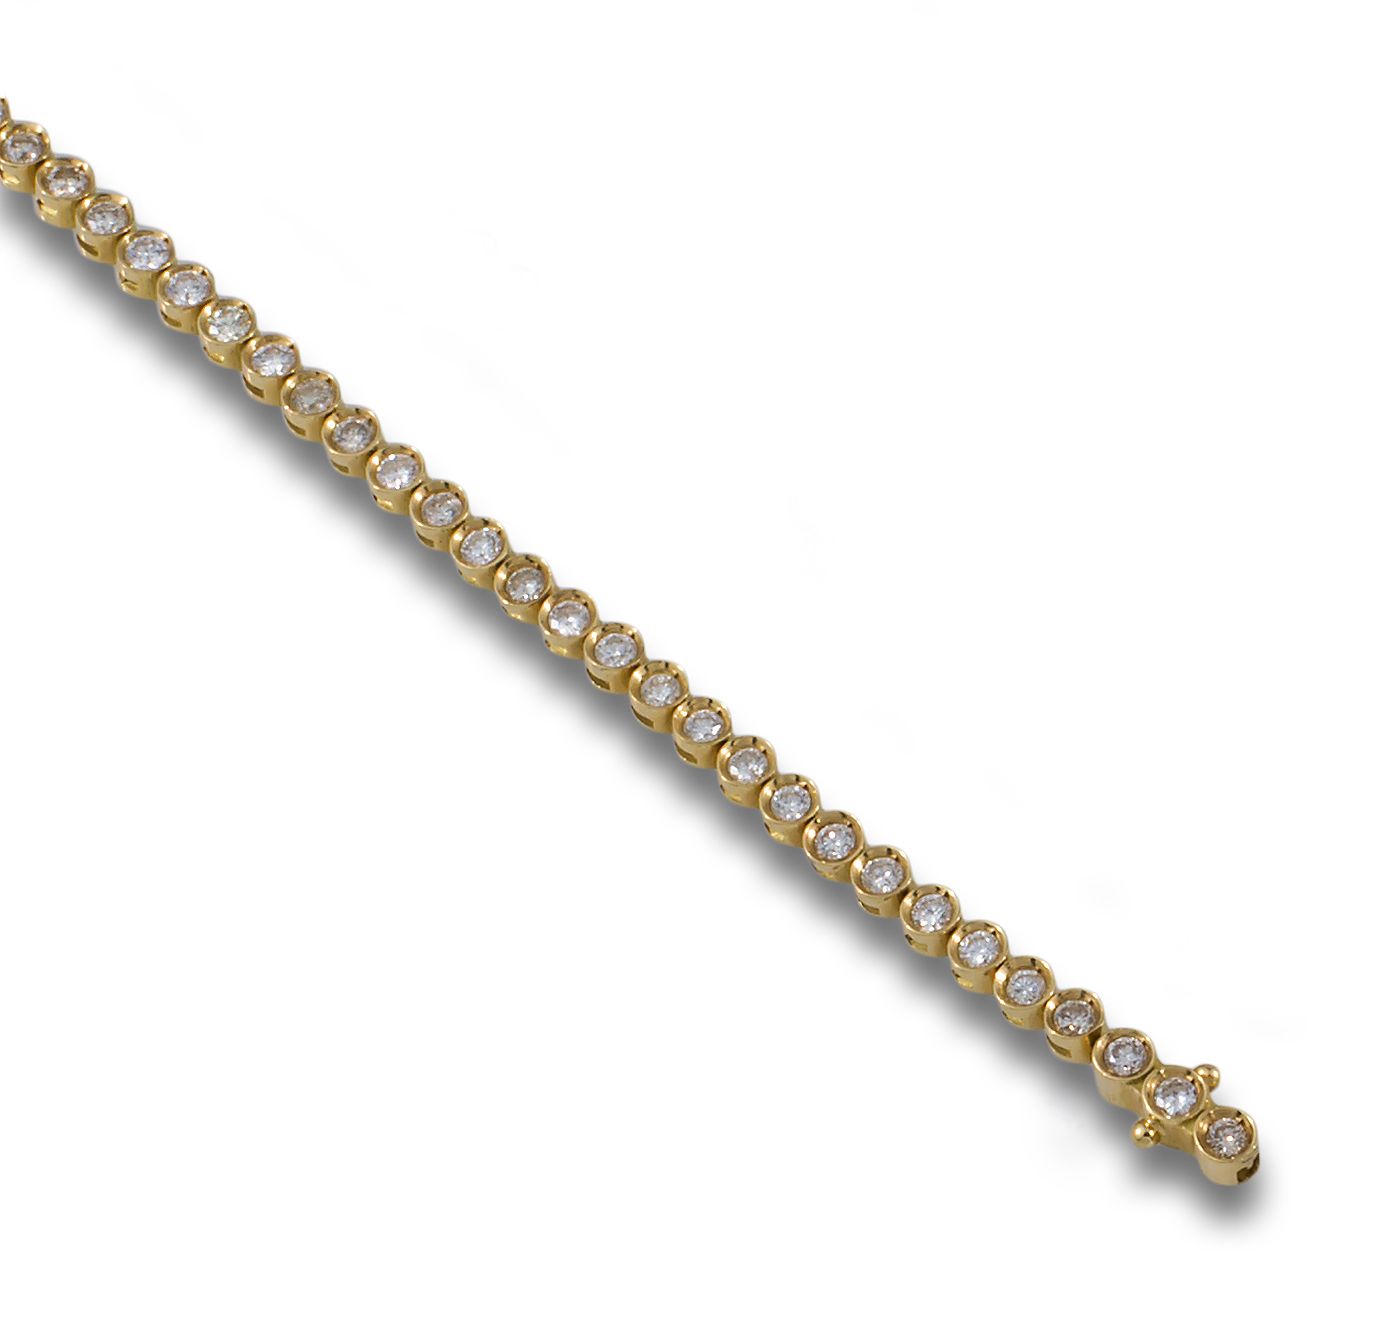 GOLD BRACELET CHATONS DIAMONDS 37 18kt yellow gold chaton design bracelet with b&hellip;